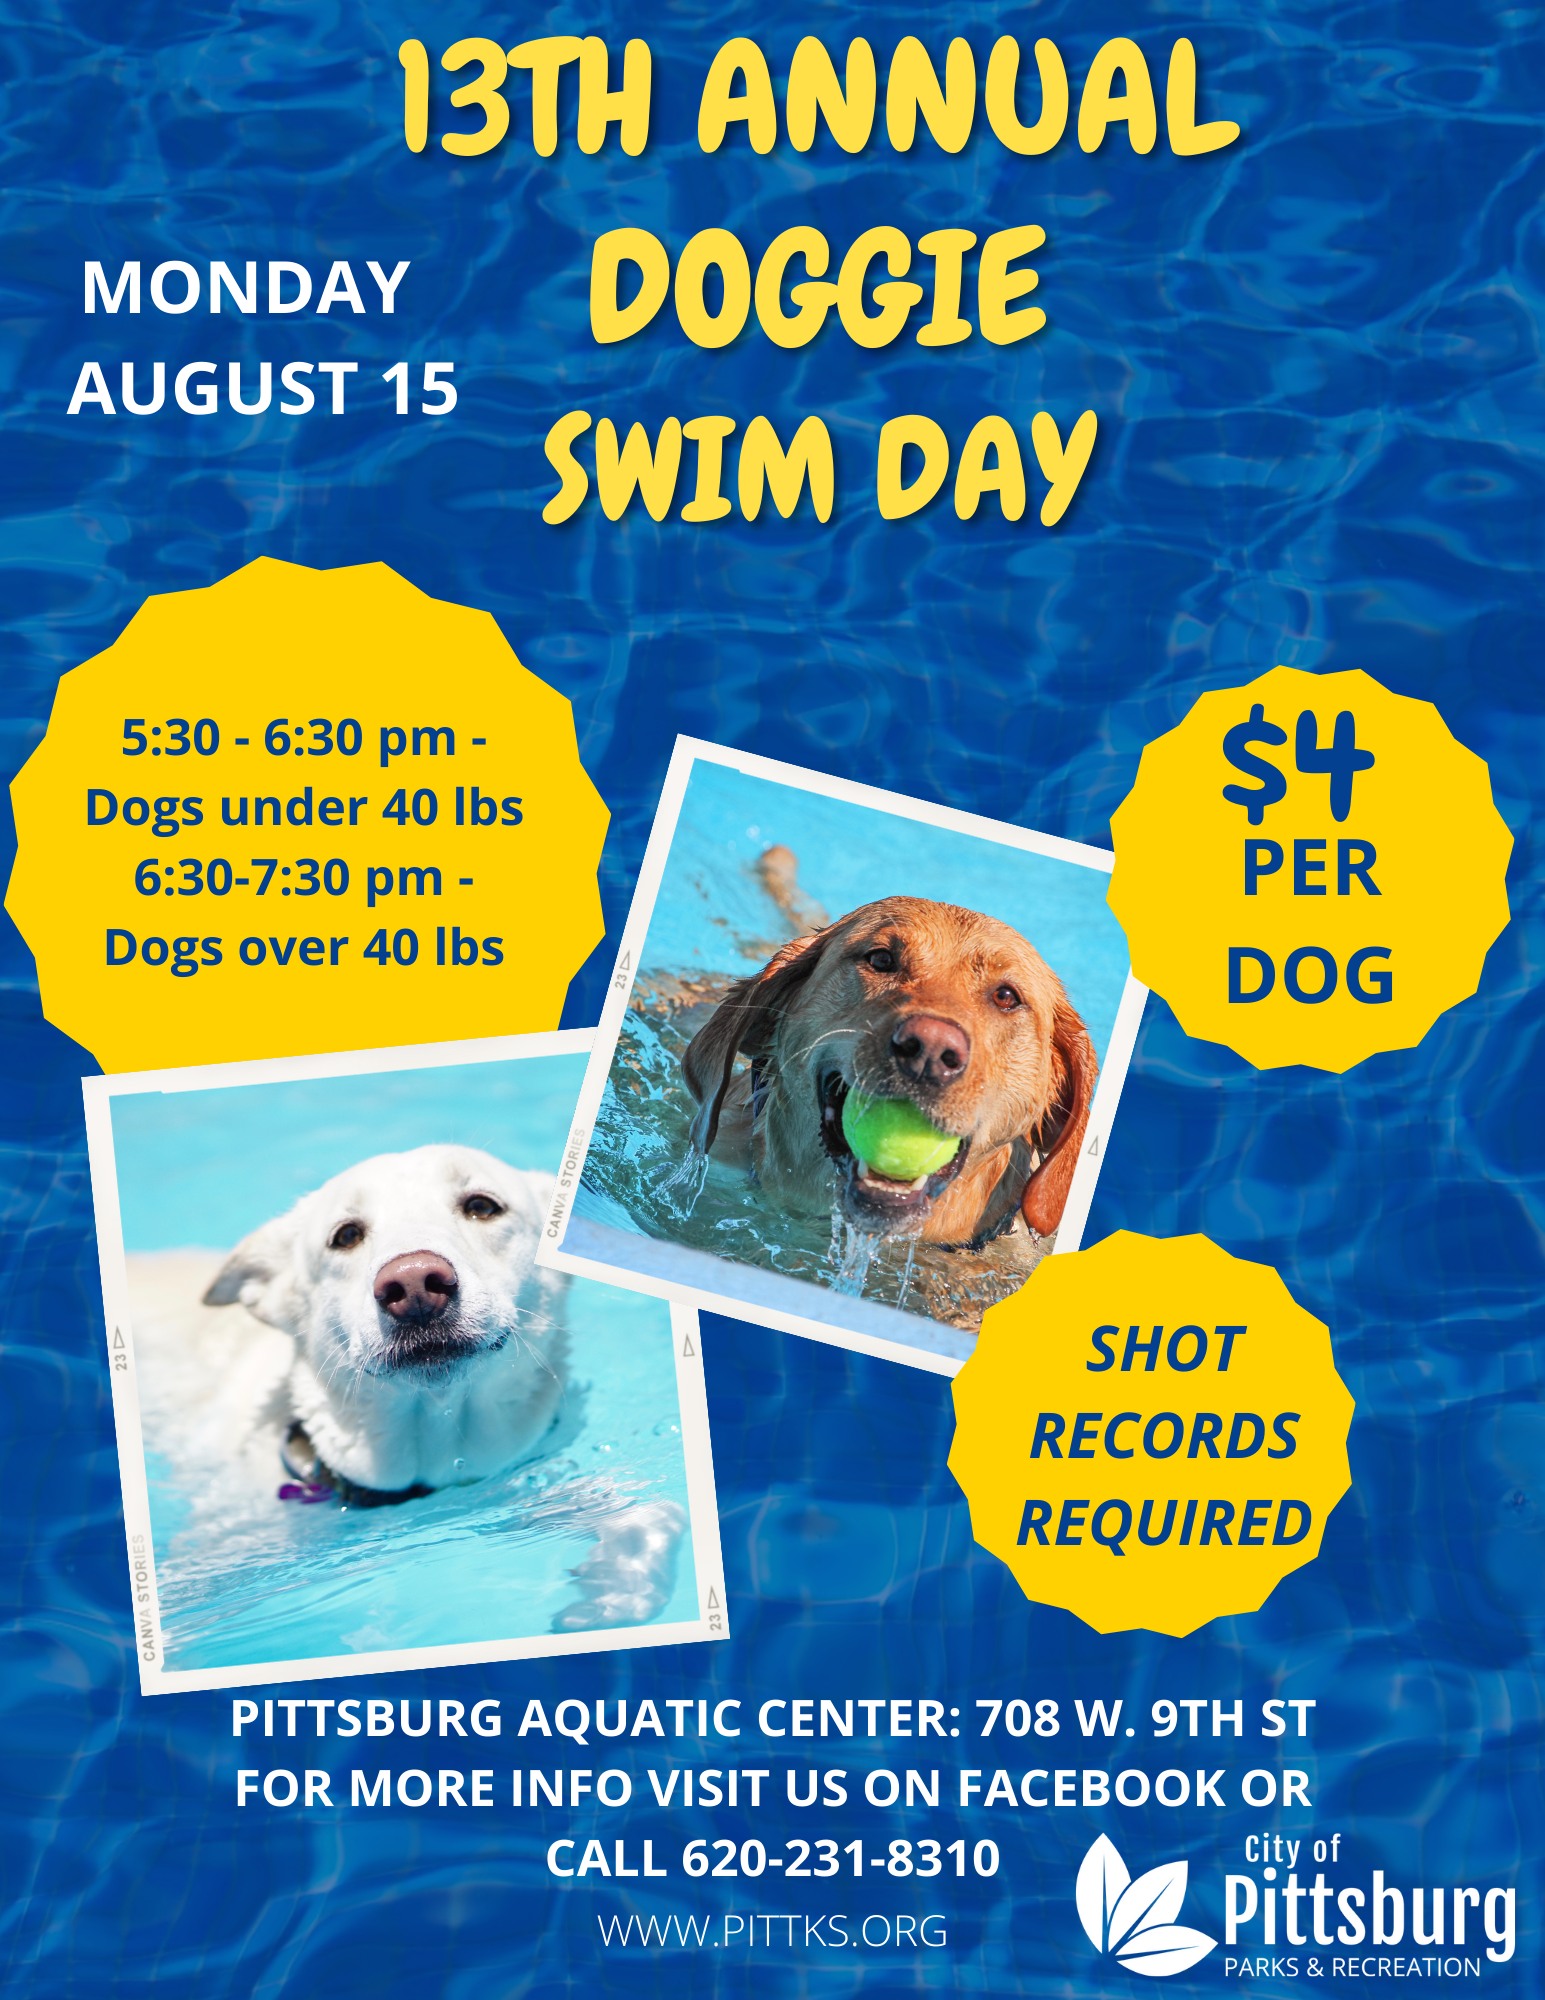 Annual Doggie Swim Day